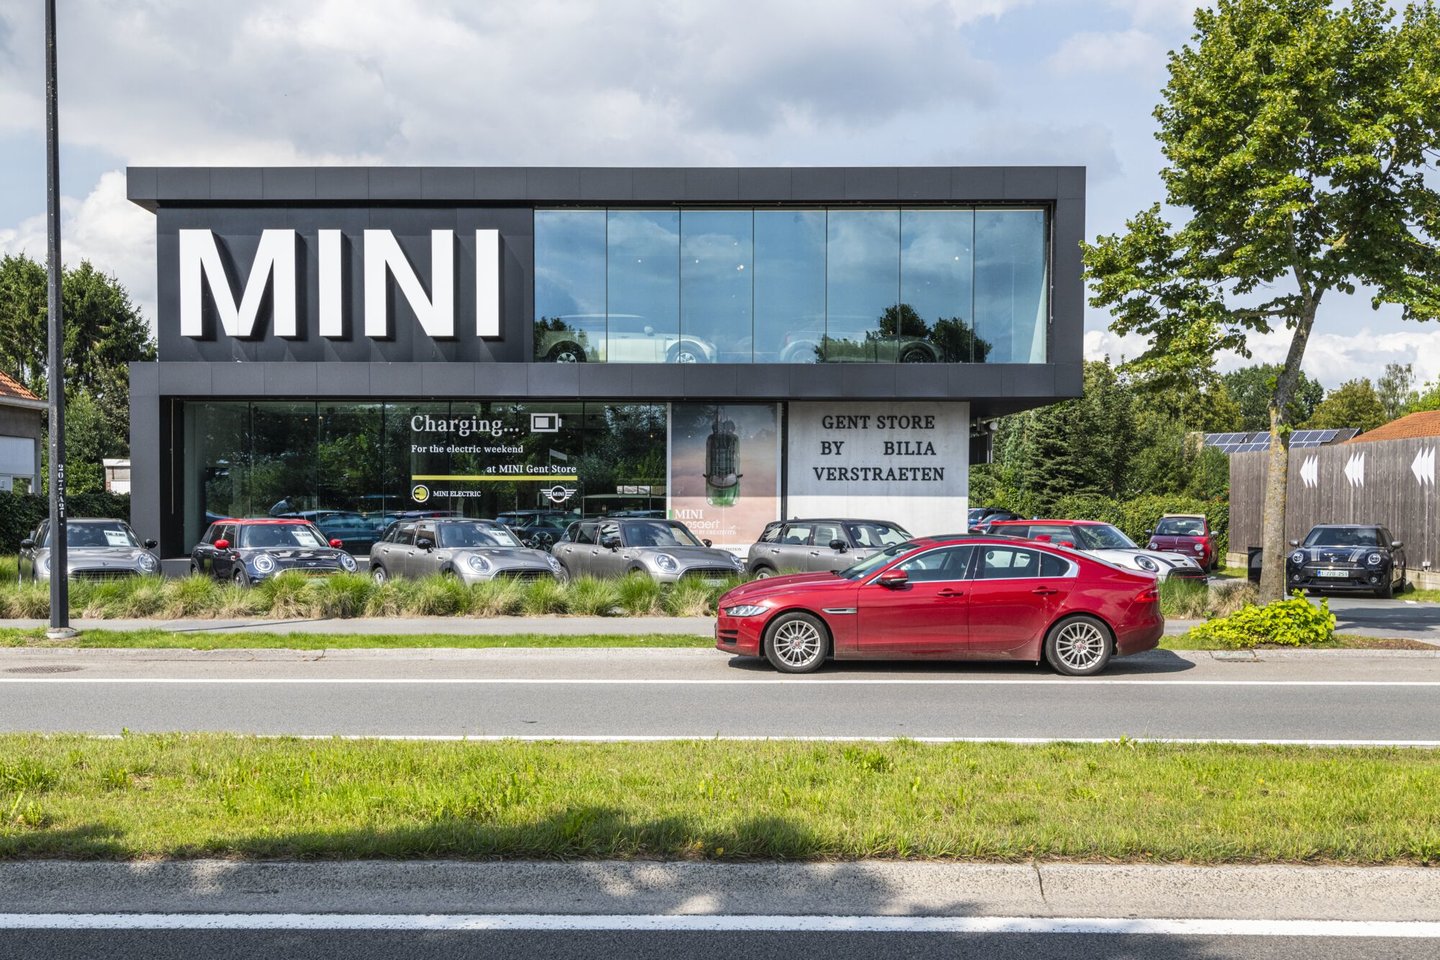 Garage Auto Mini Gent Store in Gent